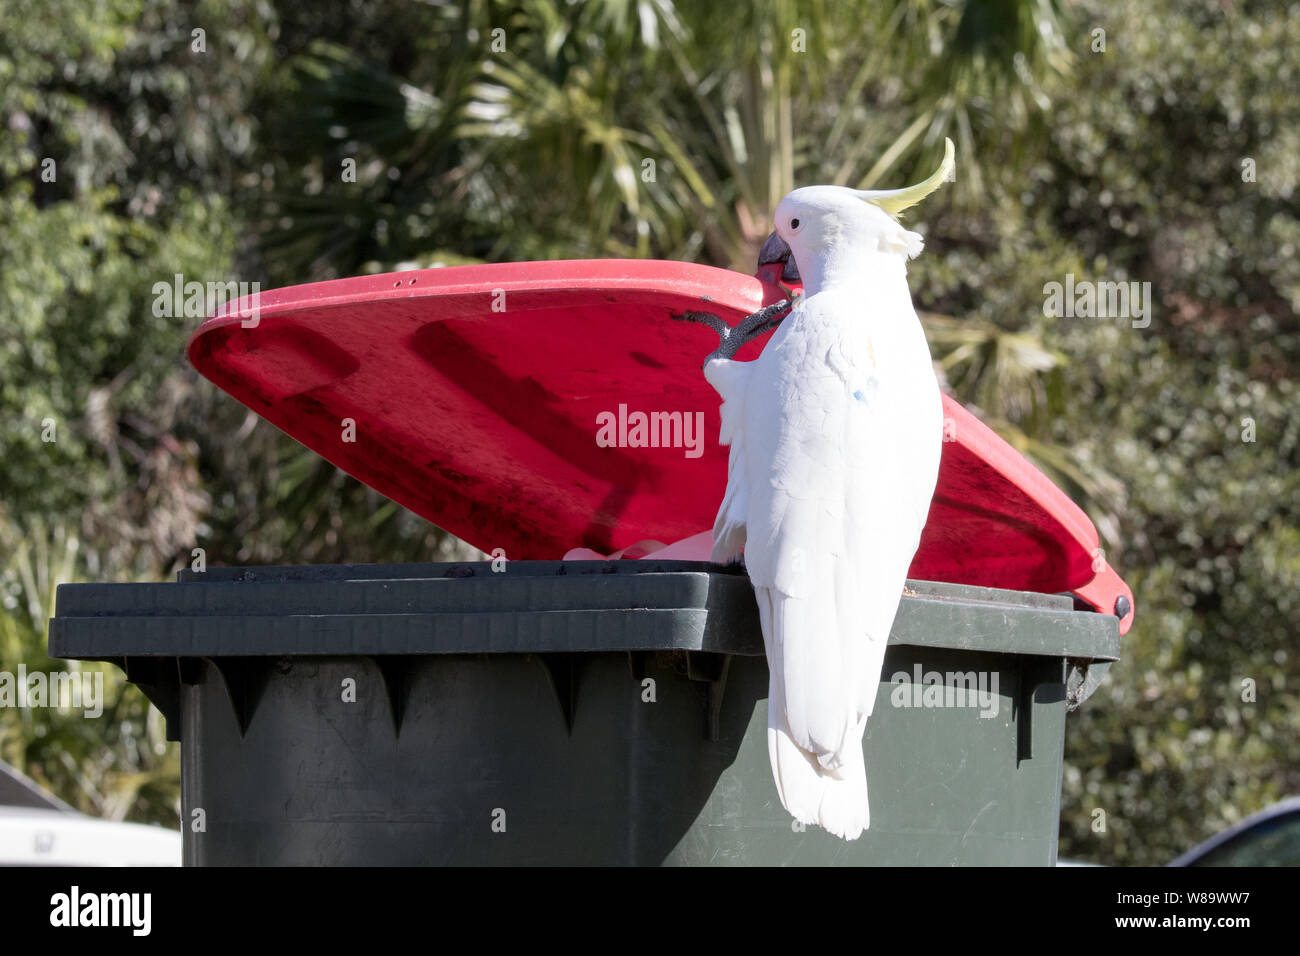 Sulphur-crested Cockatoo lifting garbage bin lid Stock Photo